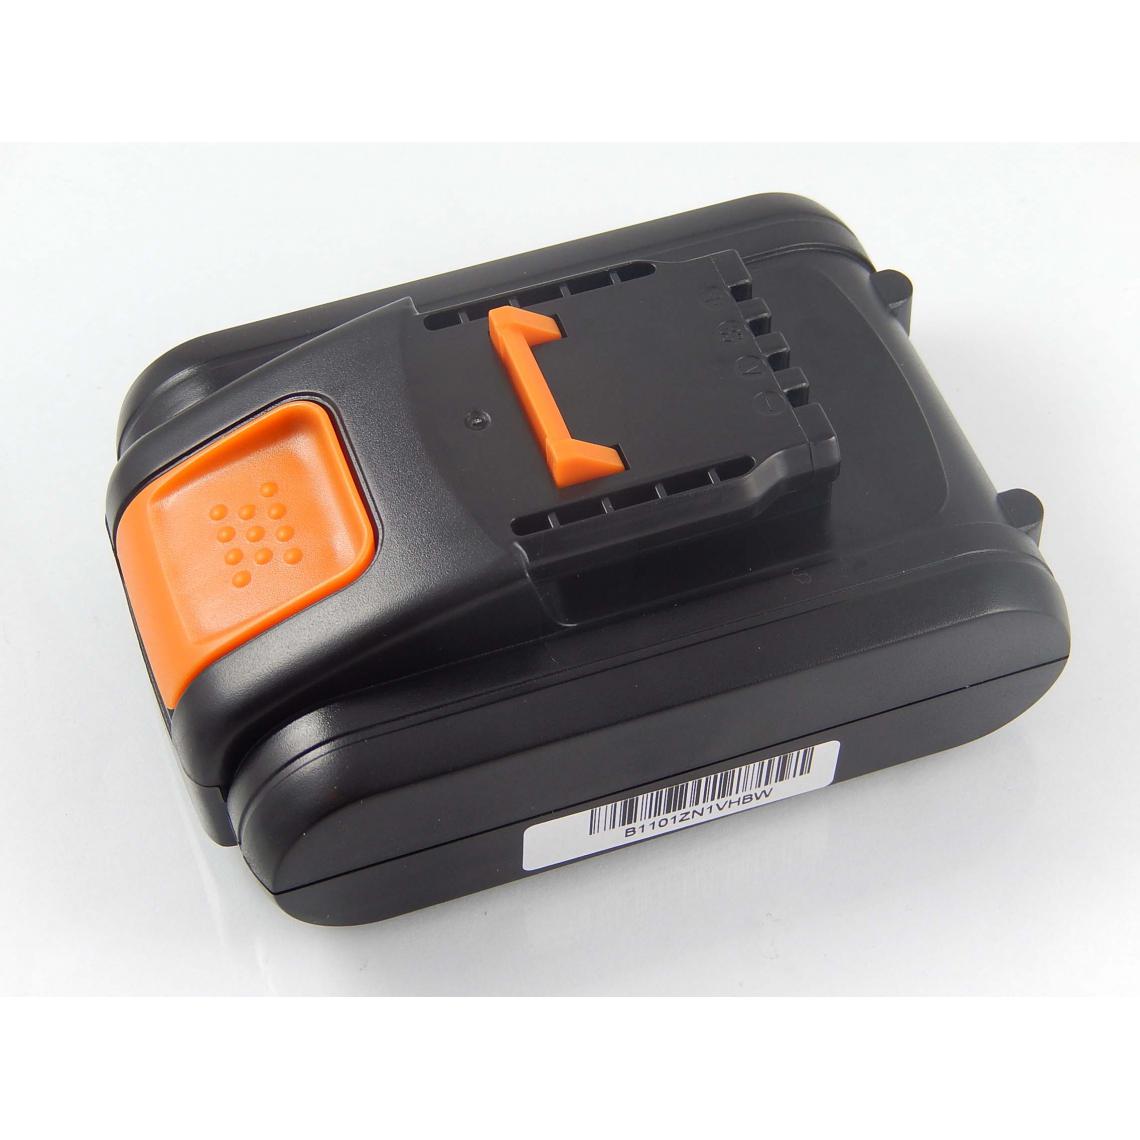 Vhbw - vhbw Batterie compatible avec Worx WG251, WG251.5, WG251E, WG255E, WG255E.5, WG259, WG259E outil électrique (2000mAh Li-ion 20 V) - Clouterie